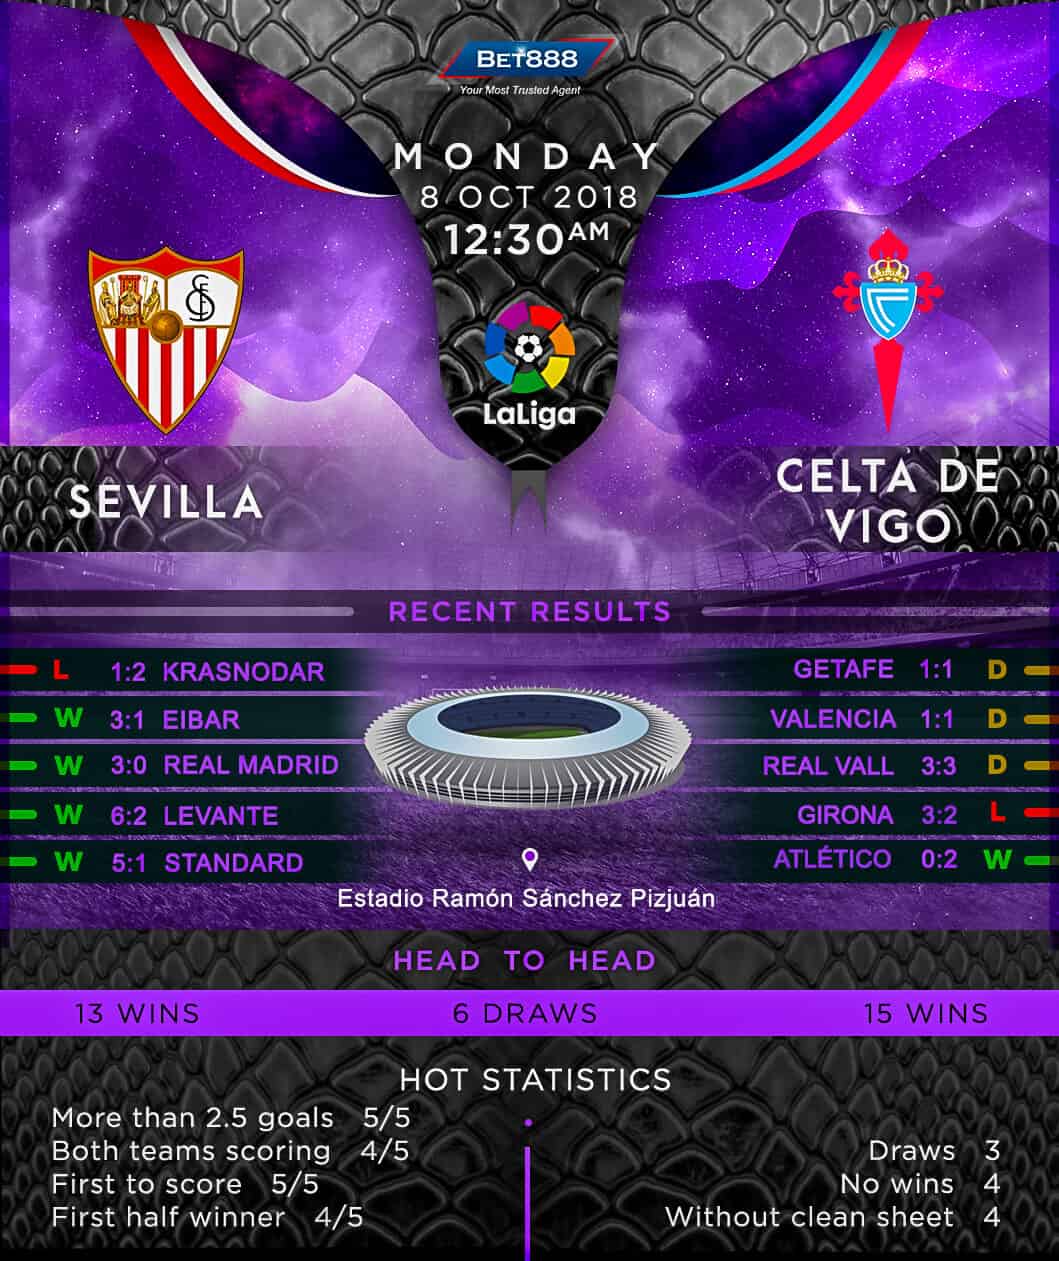 Sevilla vs Celta Vigo 08/10/18